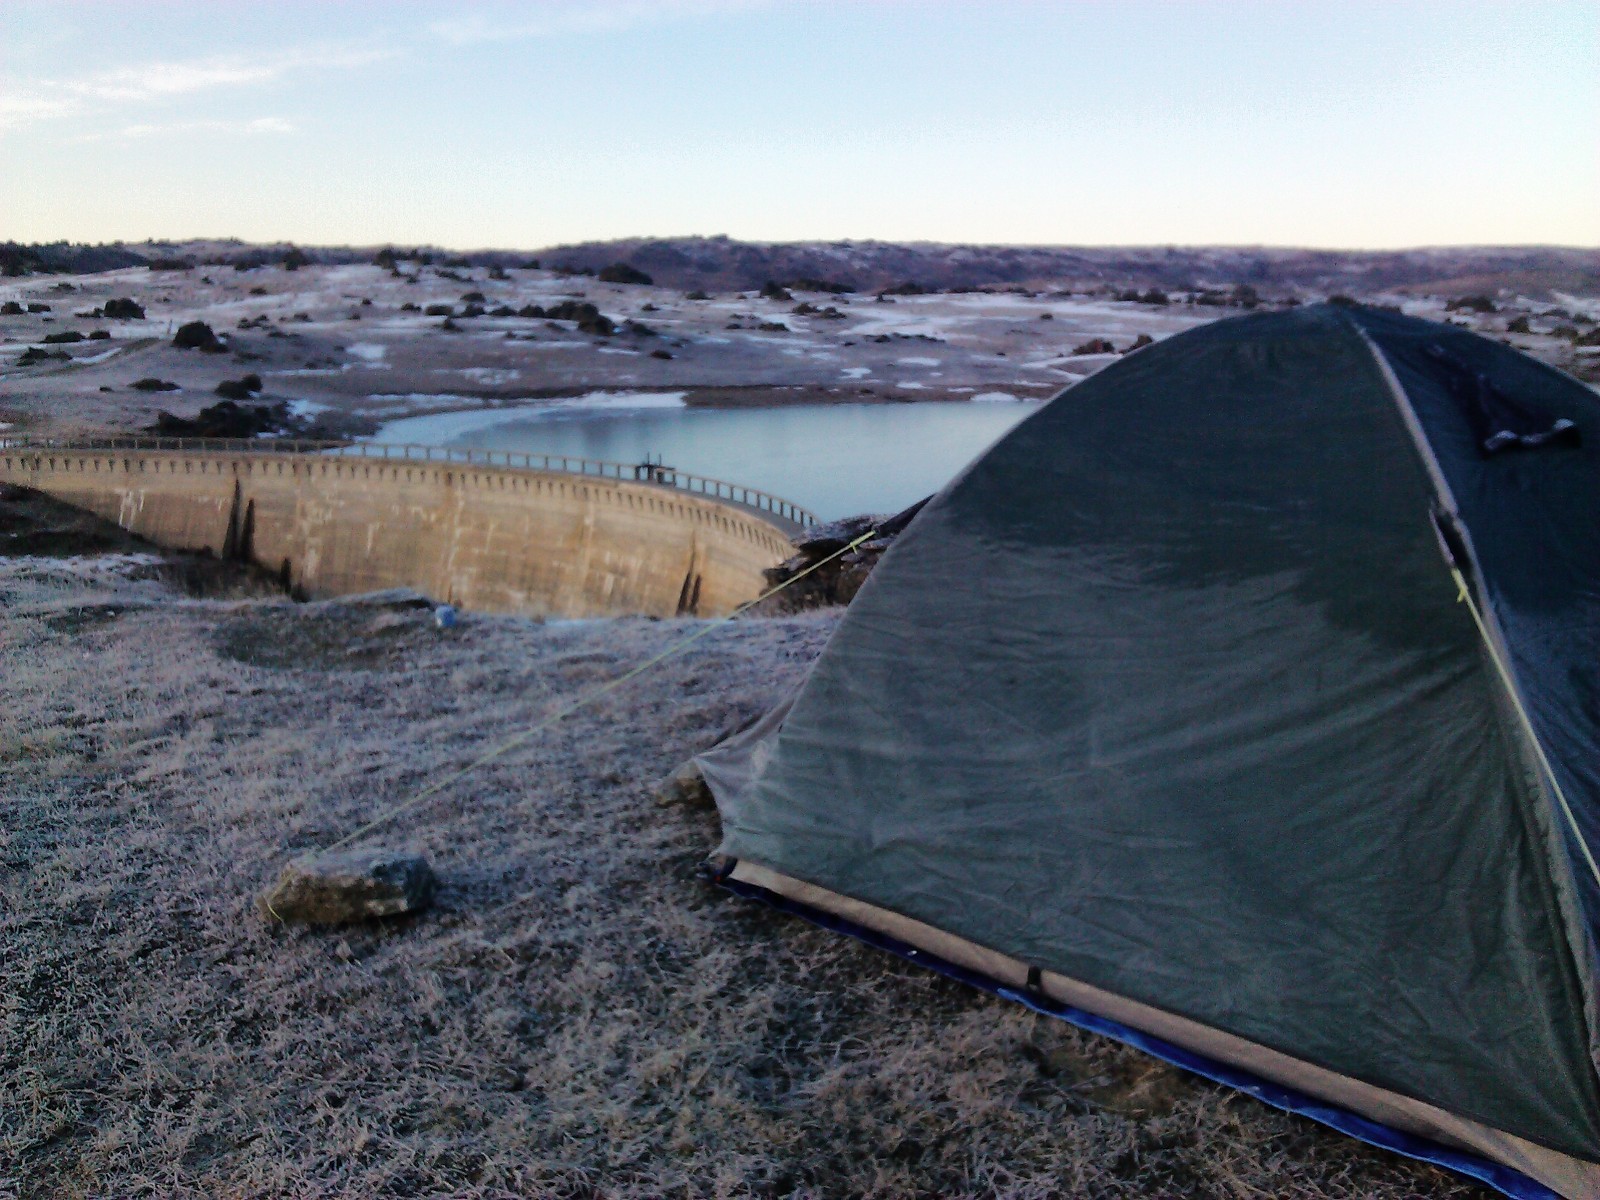 Camping at Poolburn reservoir